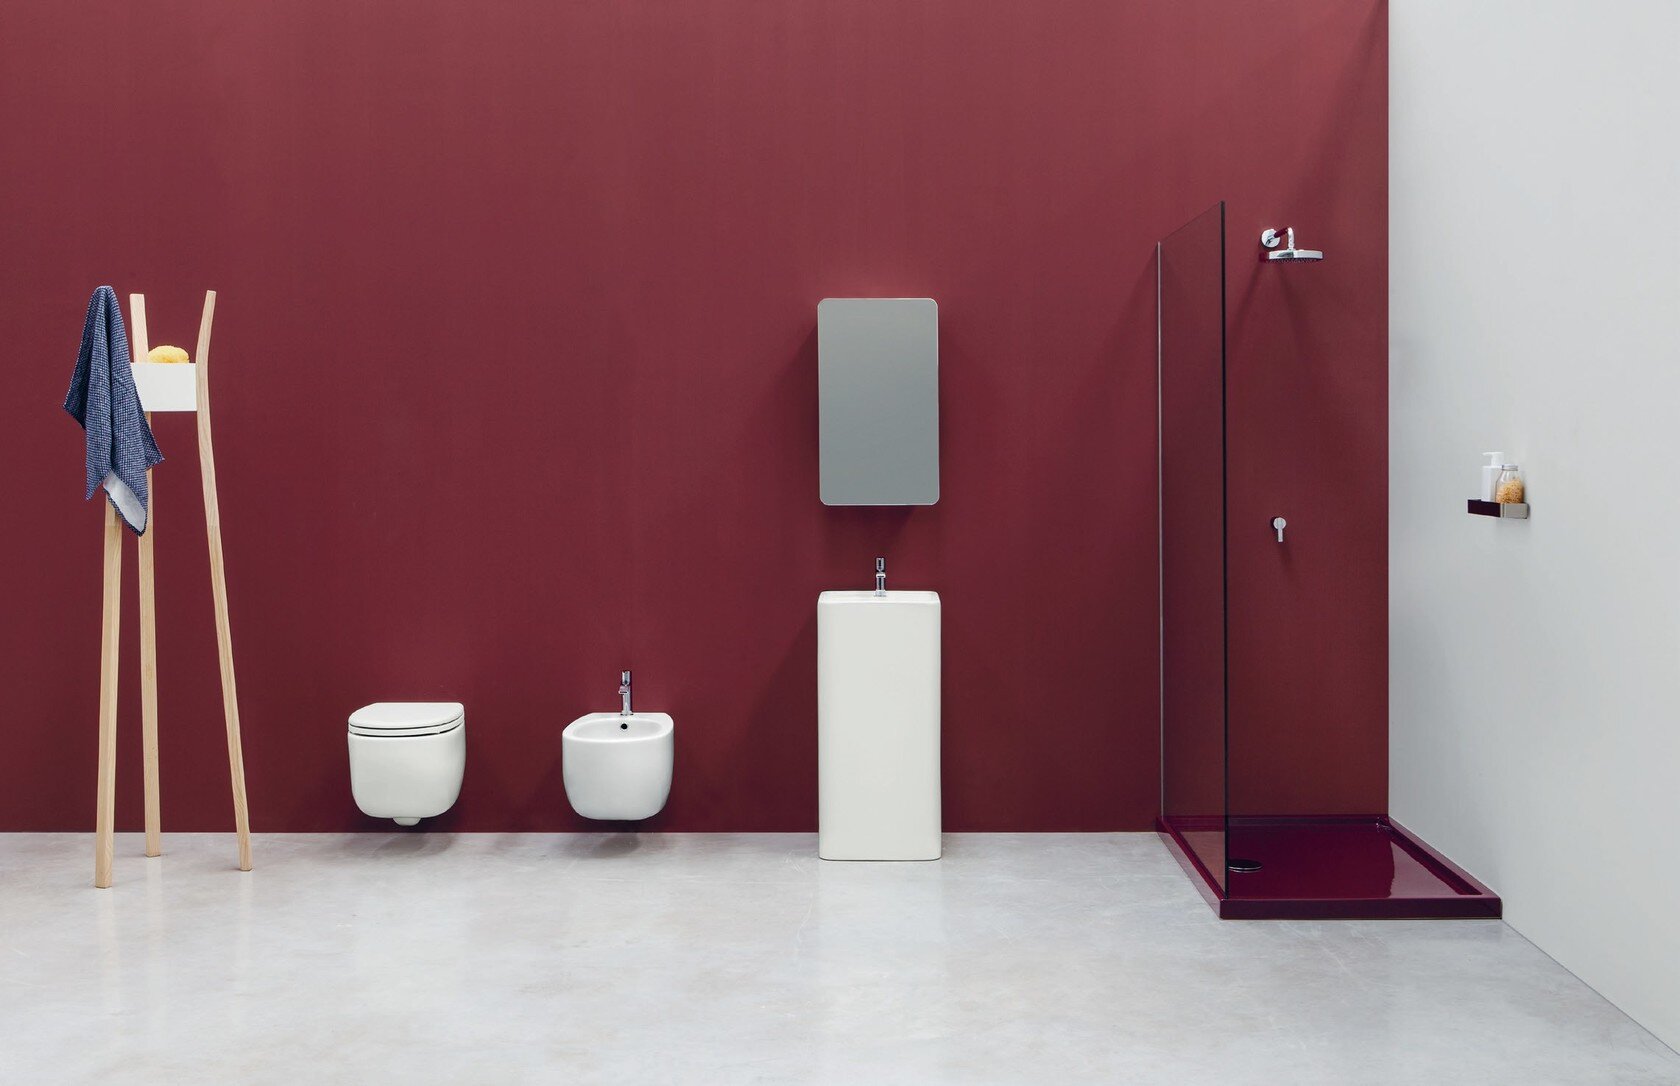 2b_SEMPLICE-Wall-hung-toilet-Nic-Design-300798-rel5790a4a4.jpeg